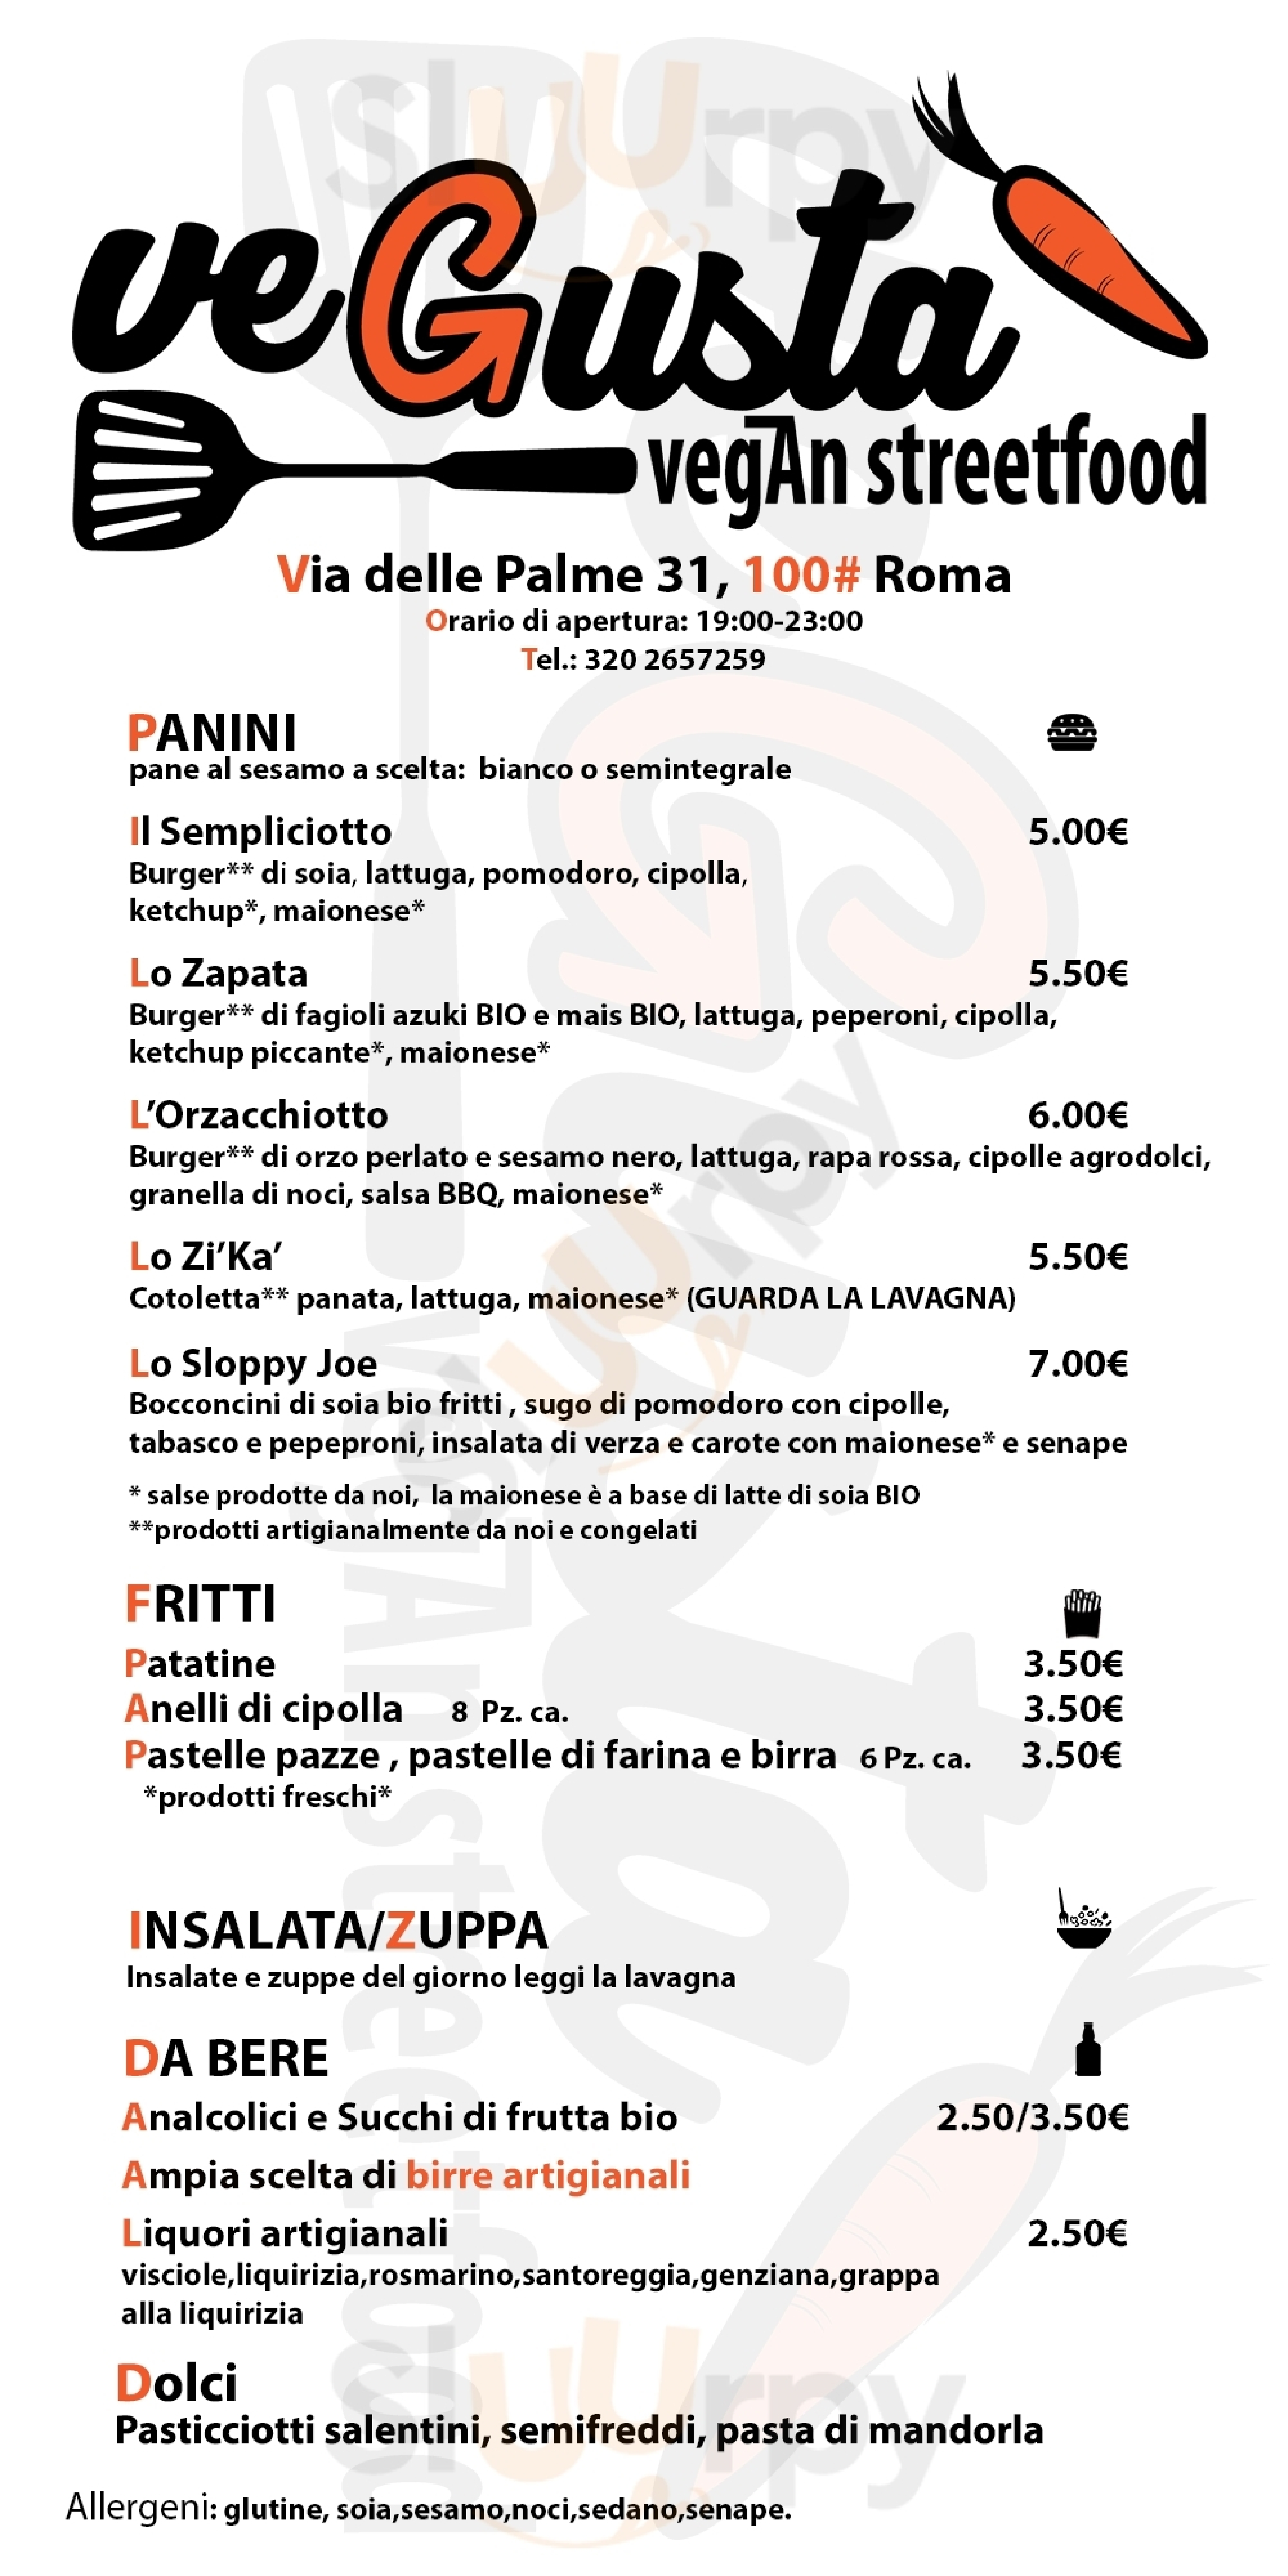 veGusta vegan streetfood Roma menù 1 pagina